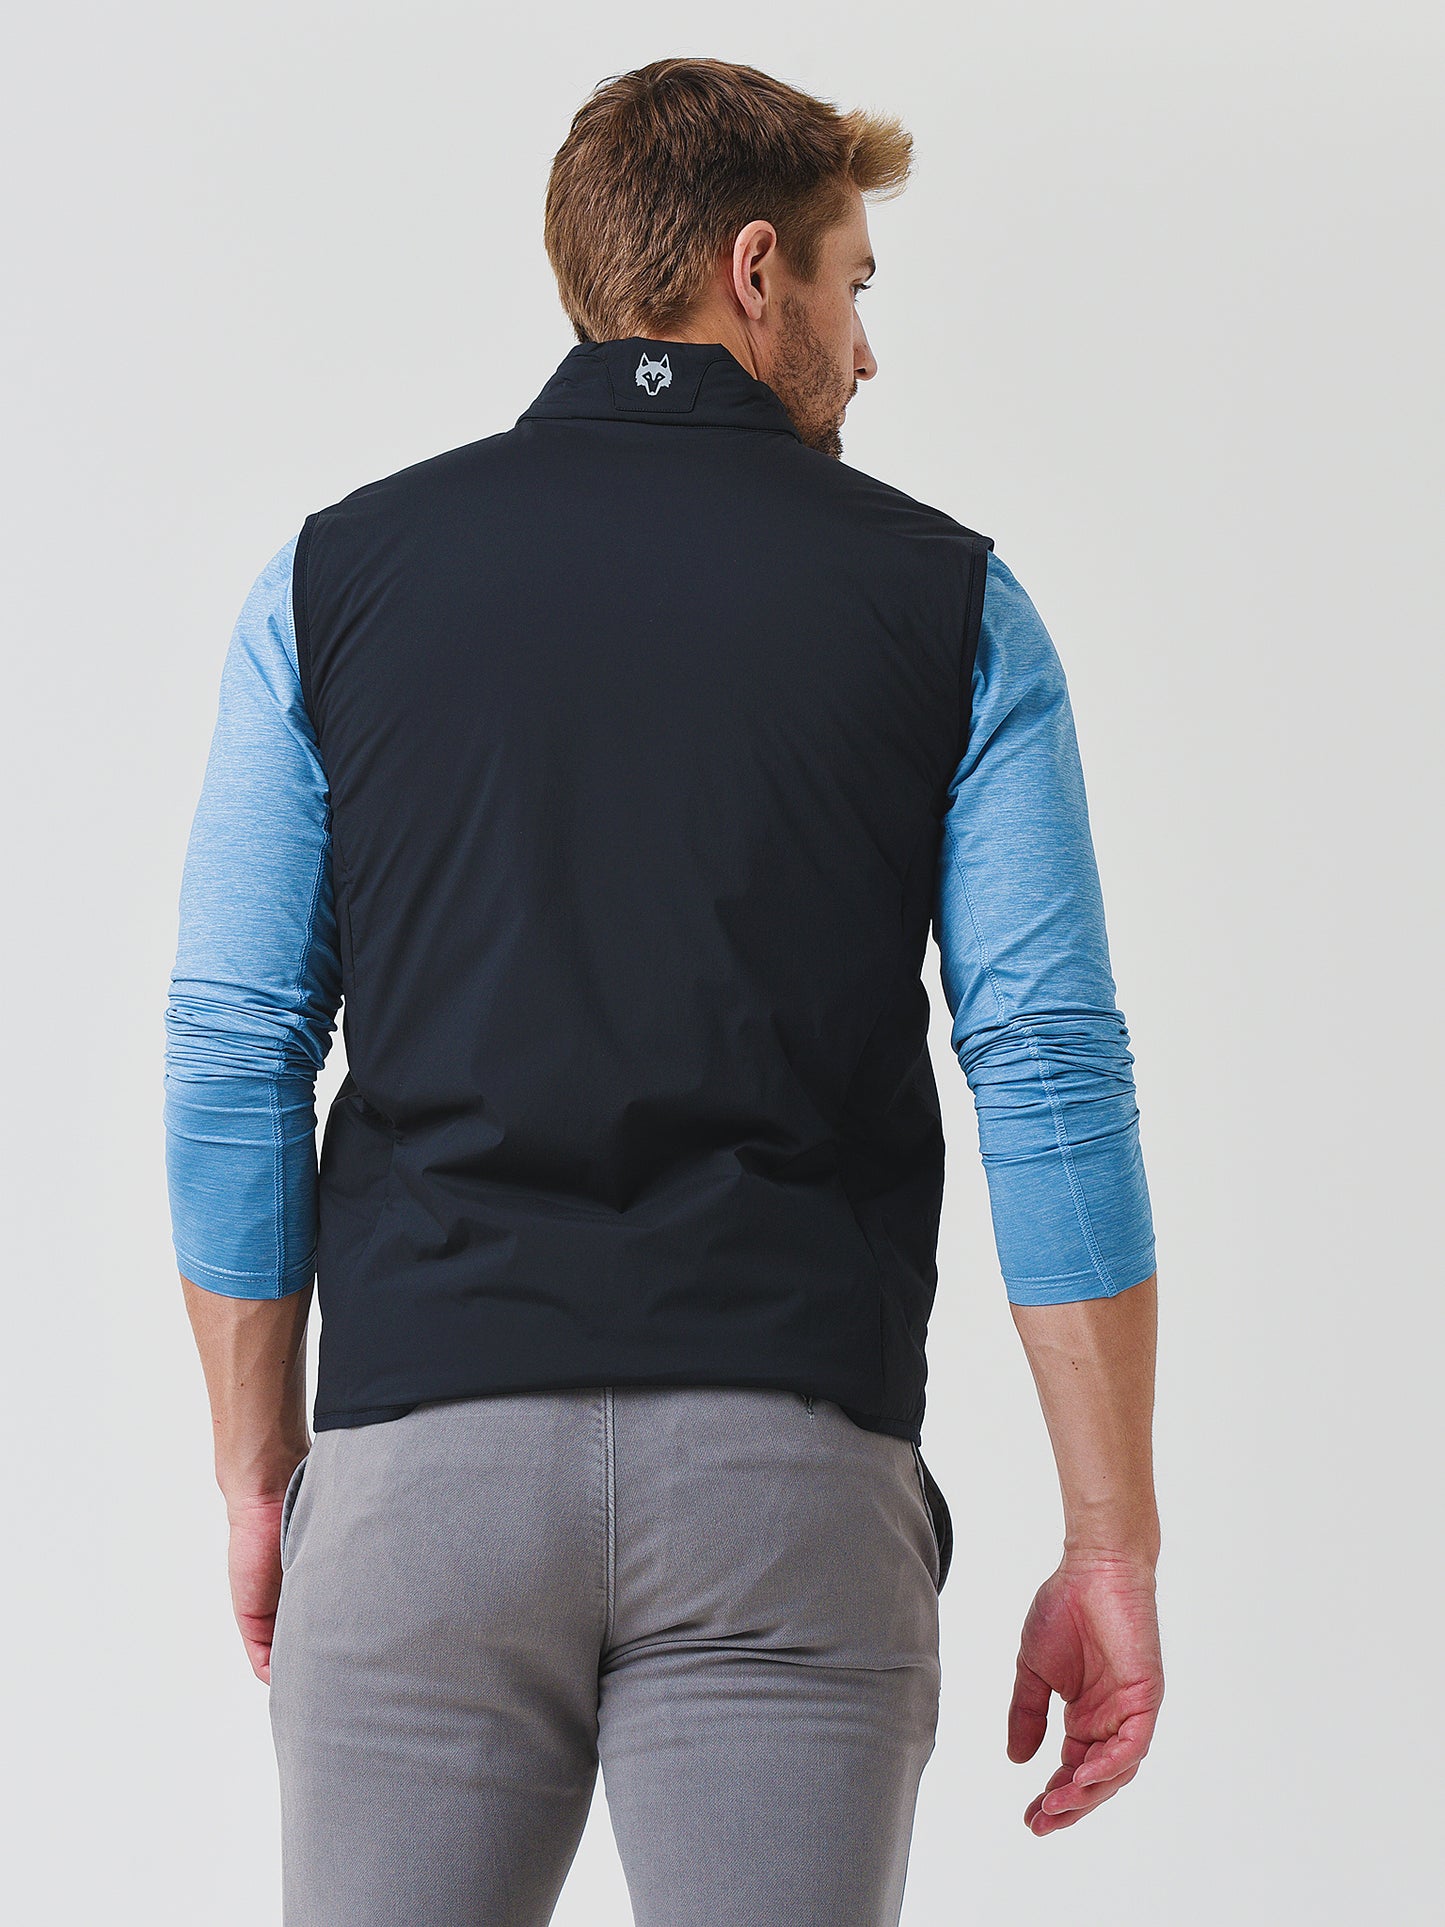 Greyson Men's Yukon Ultralight Hybrid Vest – saintbernard.com